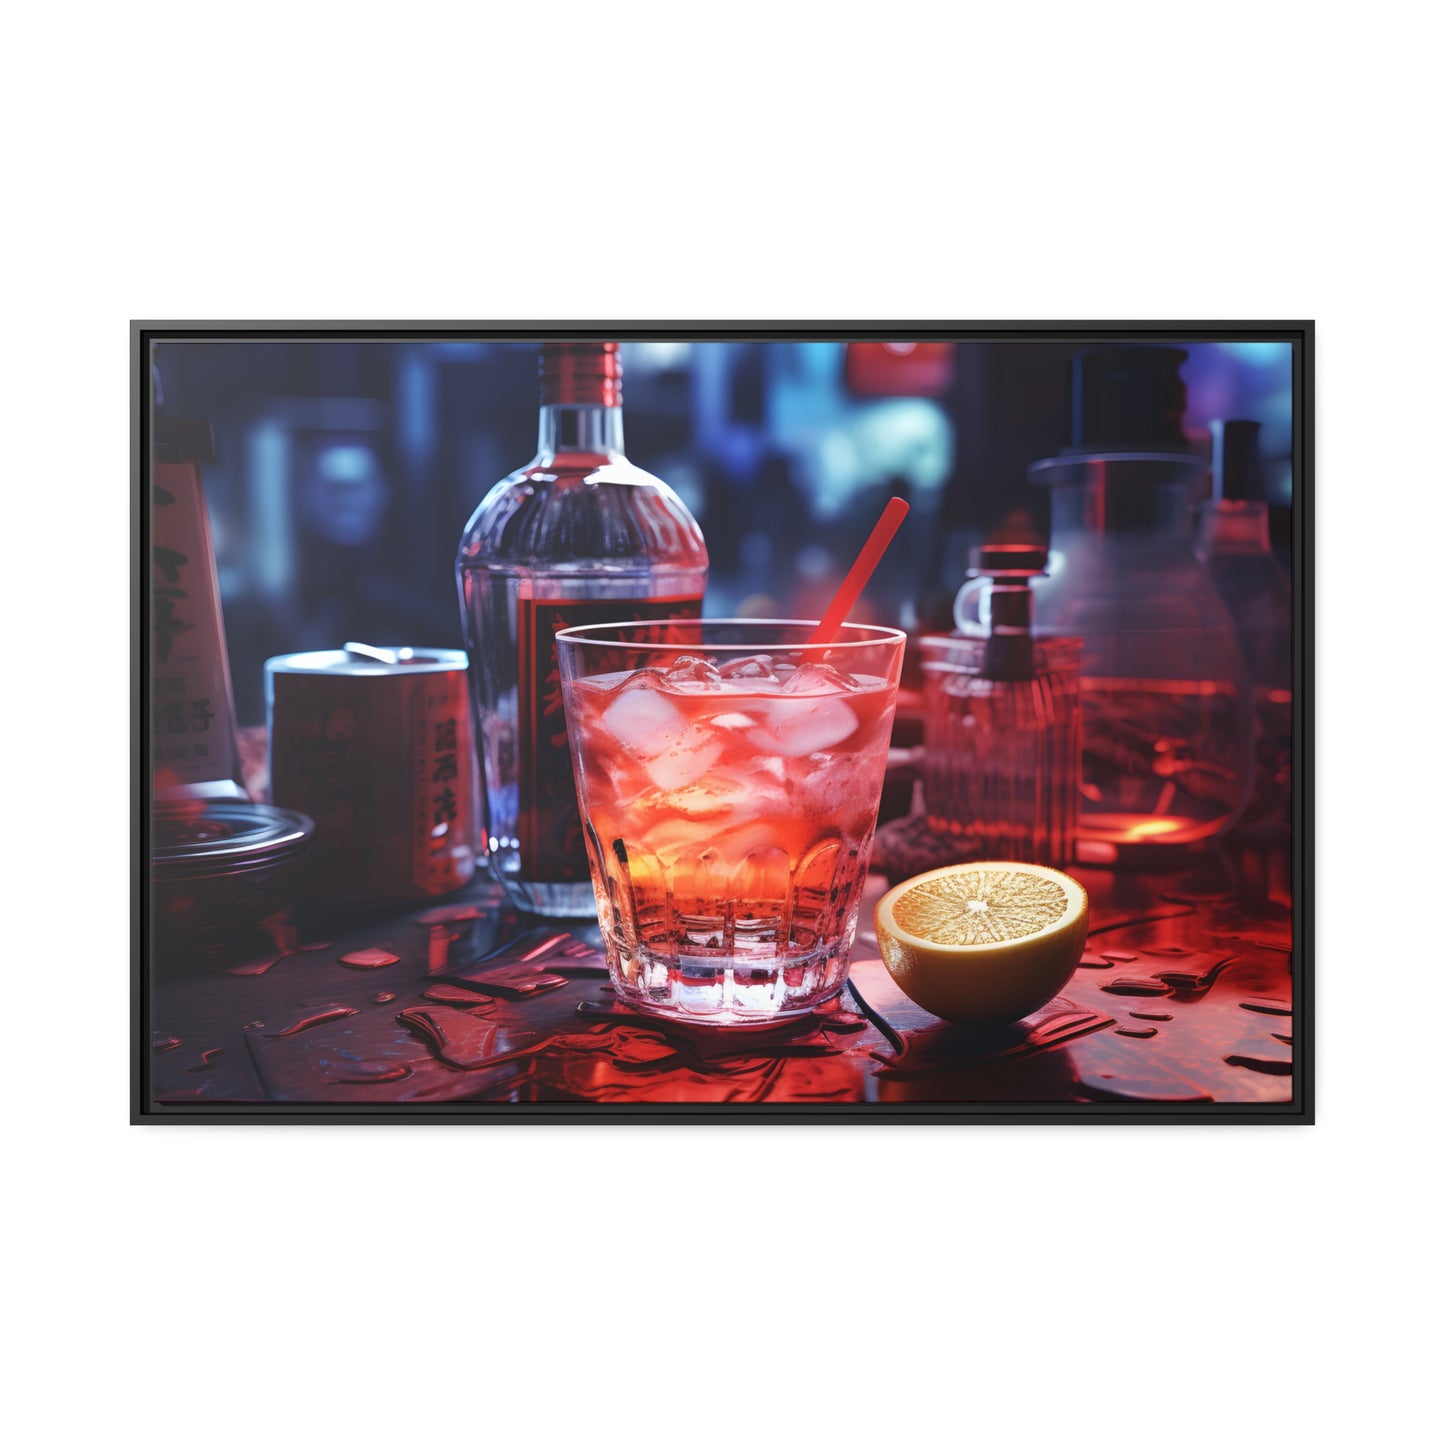 Framed Canvas Artwork Alcohol And Night Life Bar Art Floating Frame Canvas Neon Light Bar Artwork